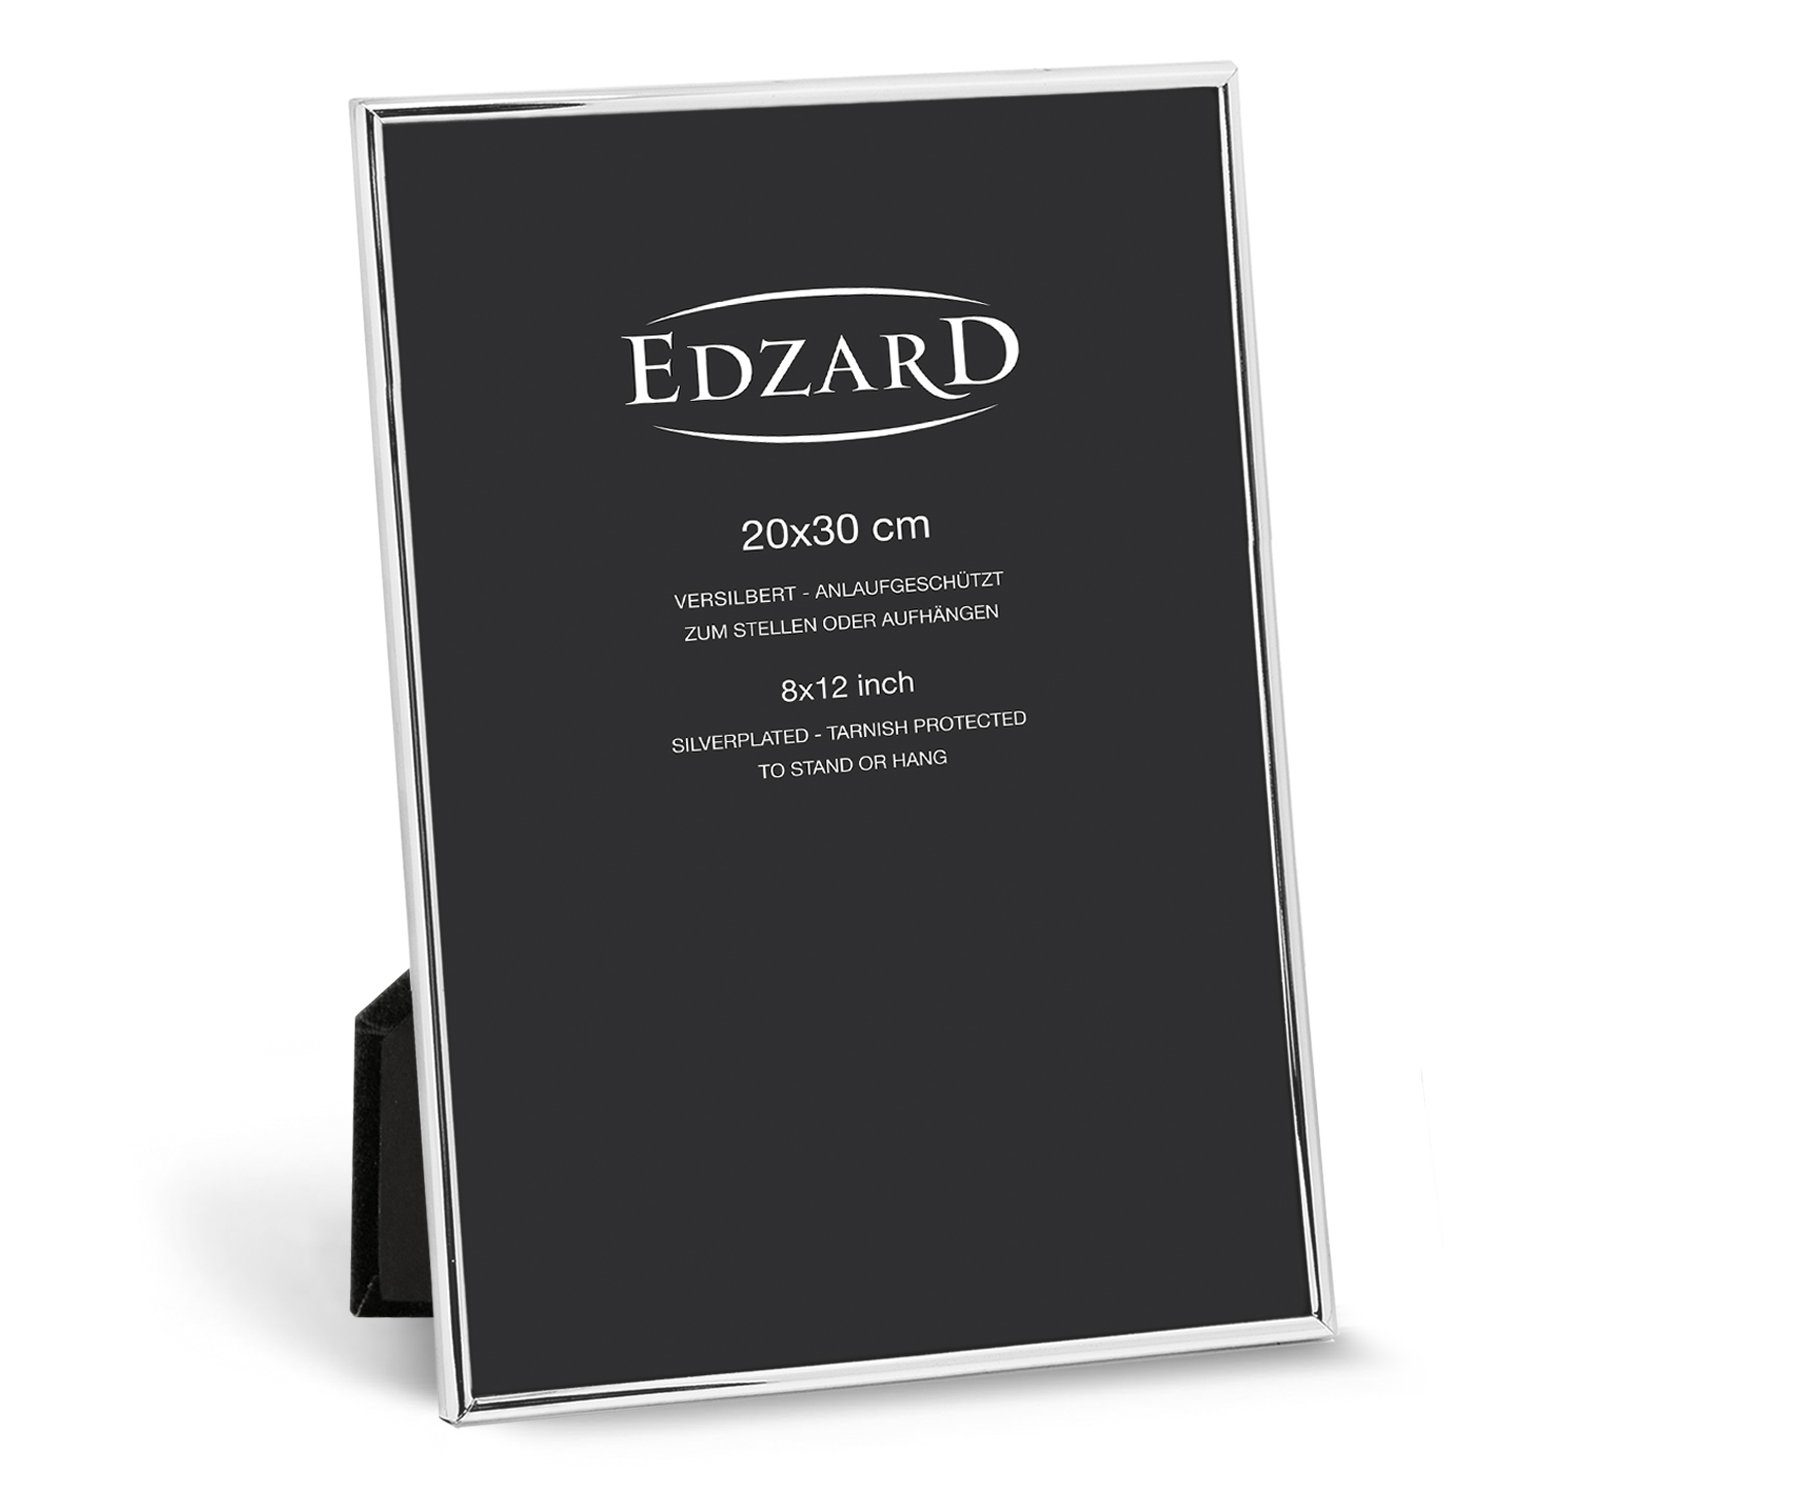 20x30 EDZARD Bilderrahmen - versilbert anlaufgeschützt Genua, & (ca. Foto cm A4) edel für